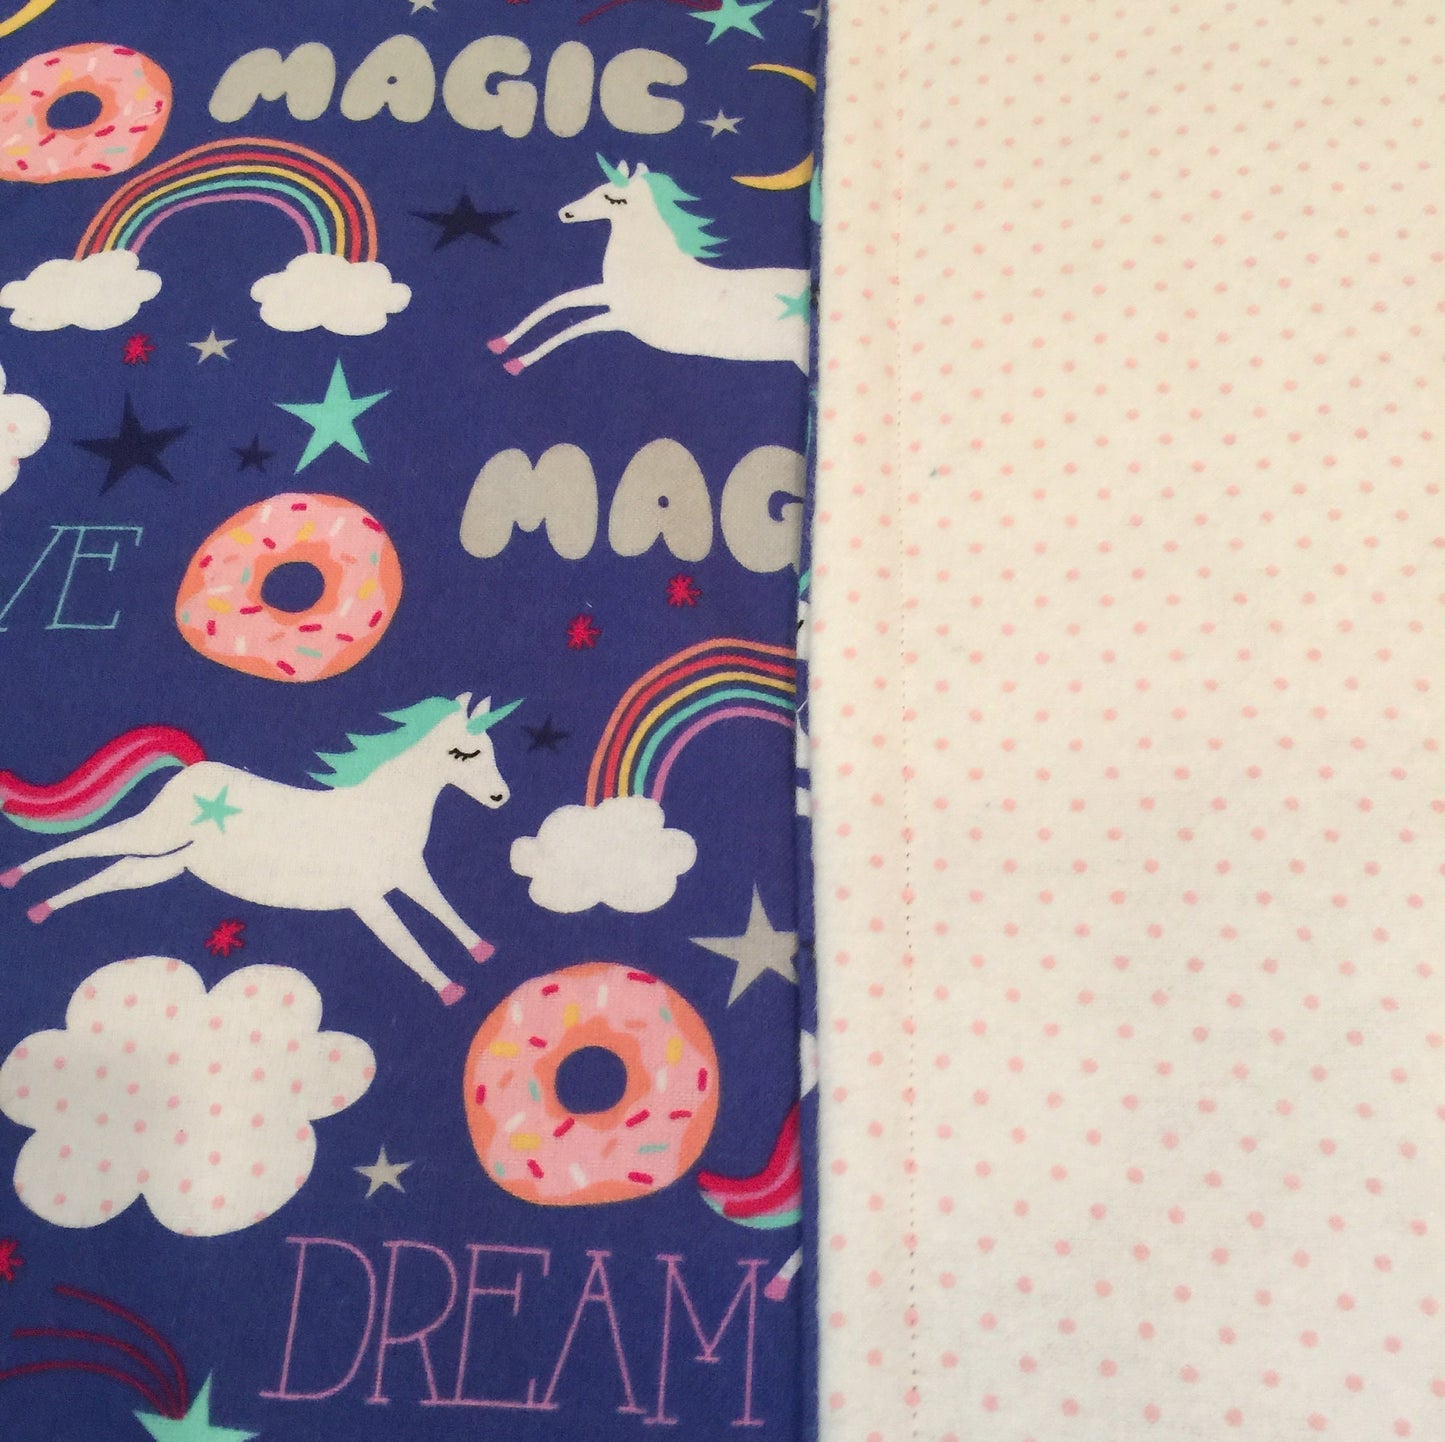 Magical rainbow, unicorn and donut blanket!